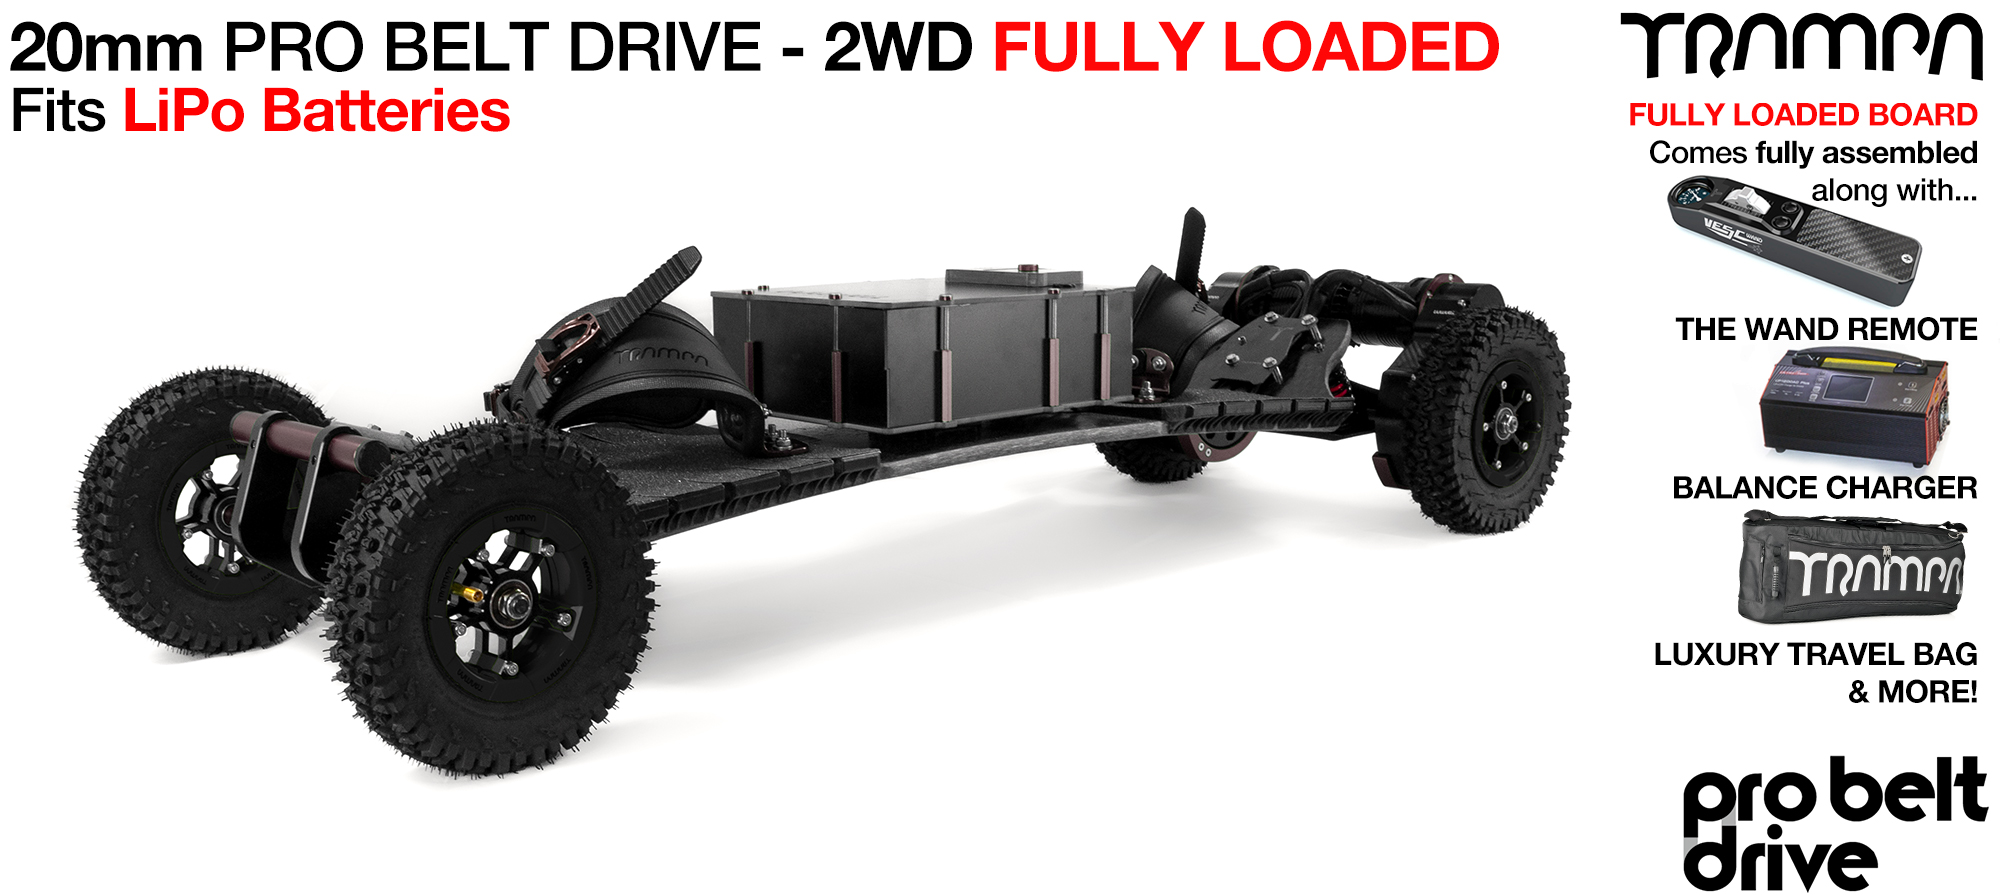 2WD 20mm PRO BELT DRIVE E-MTB - LOADED DOUBLE STACK (£2,030)